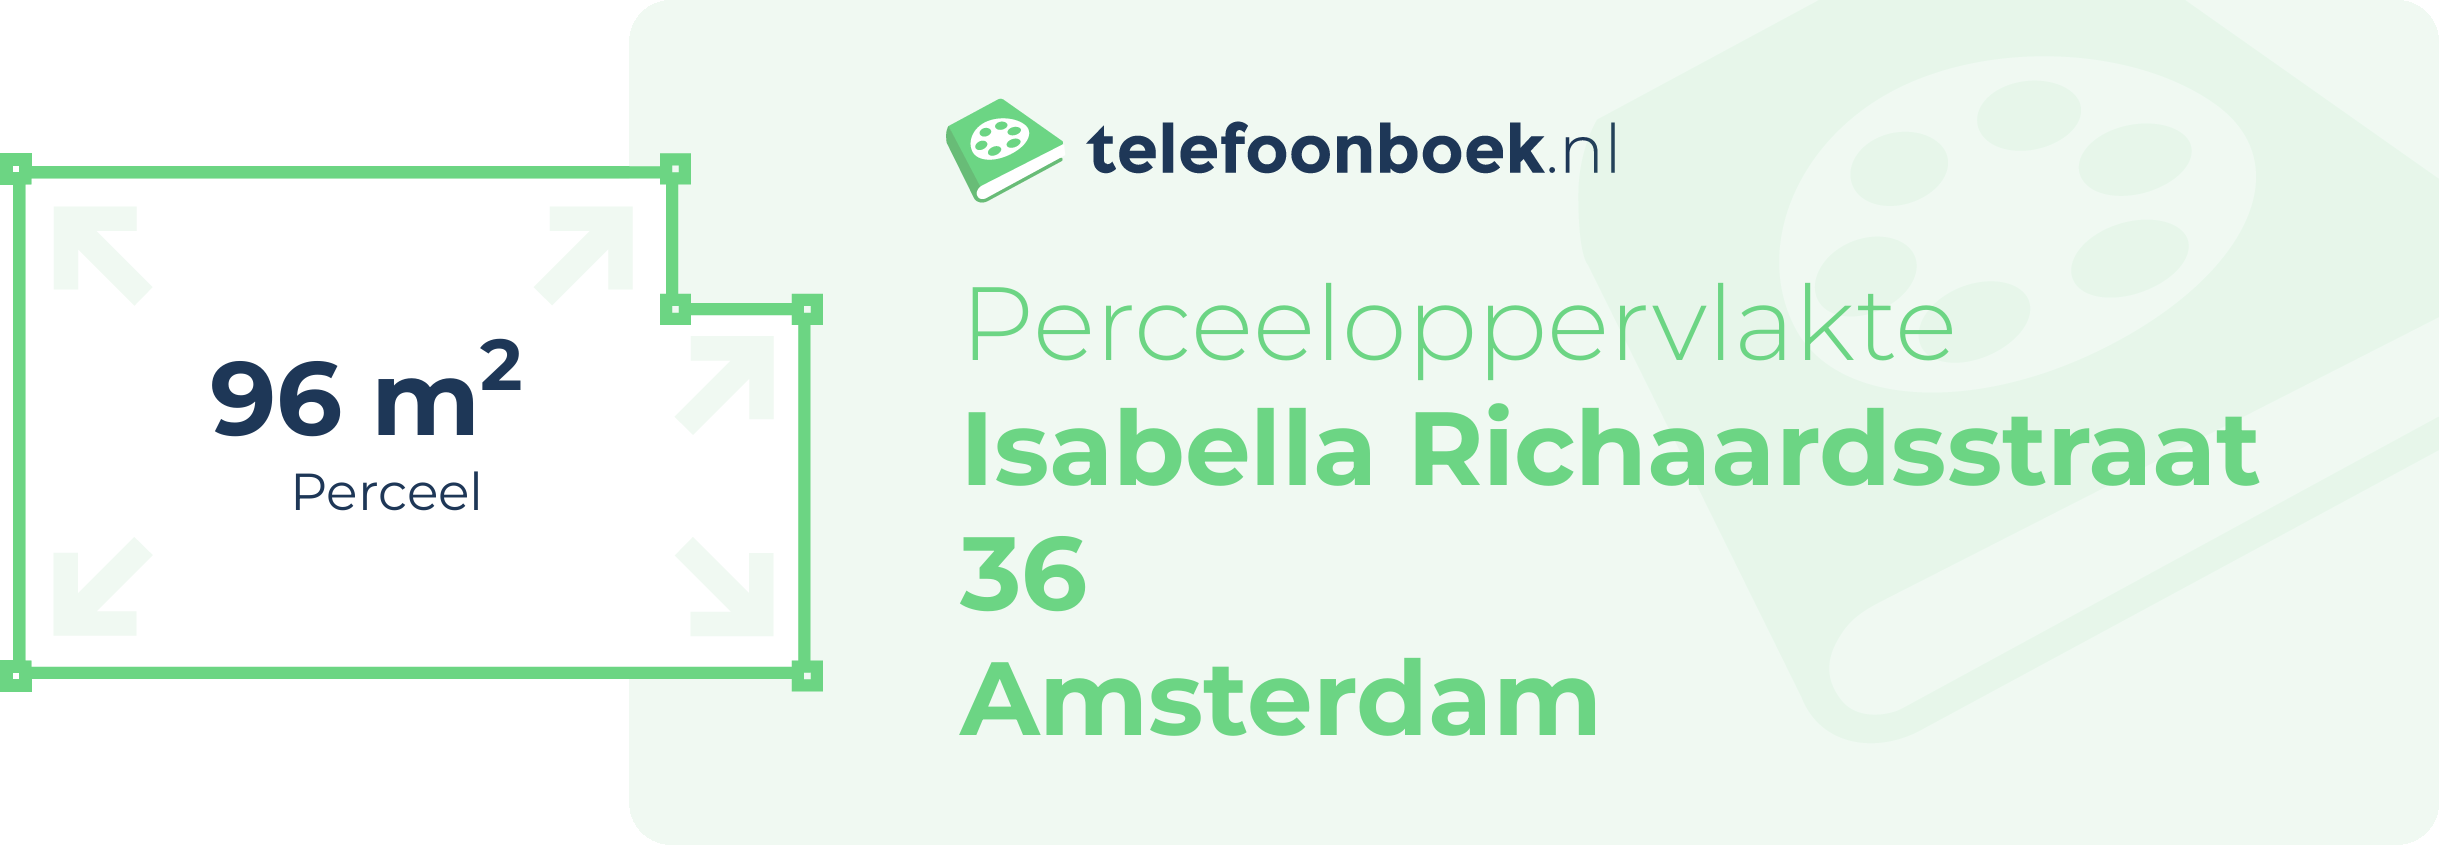 Perceeloppervlakte Isabella Richaardsstraat 36 Amsterdam